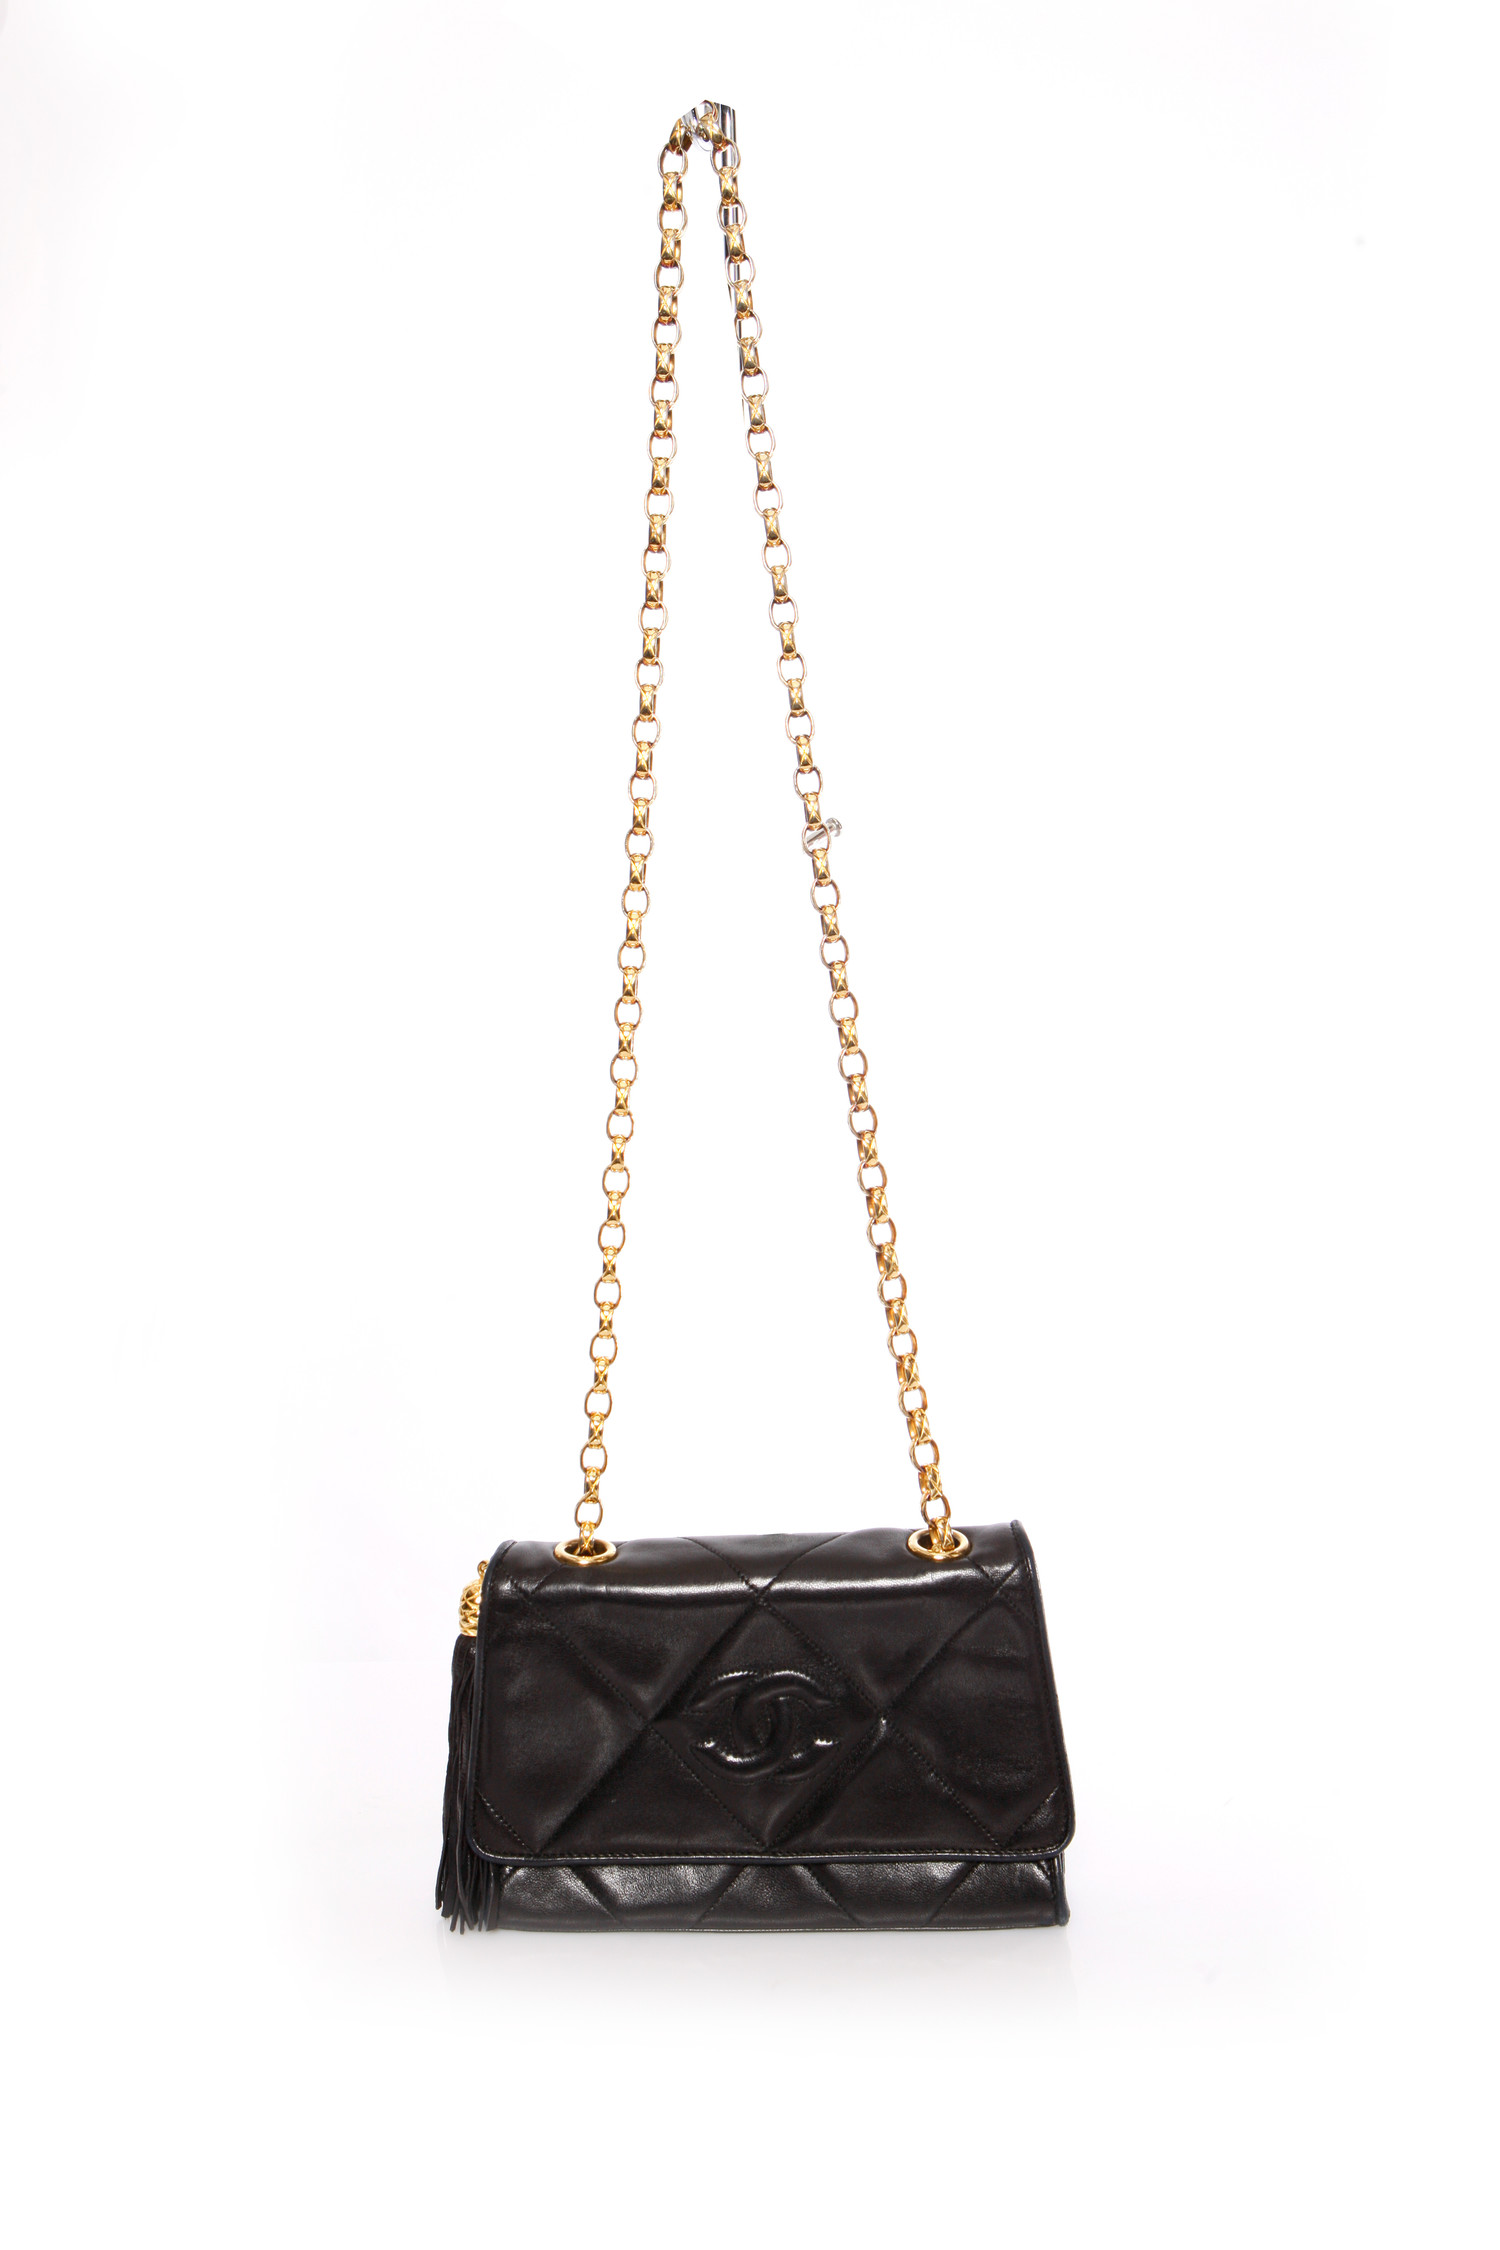 Bags | Spacious Black Purse With Gold Hardware | Poshmark